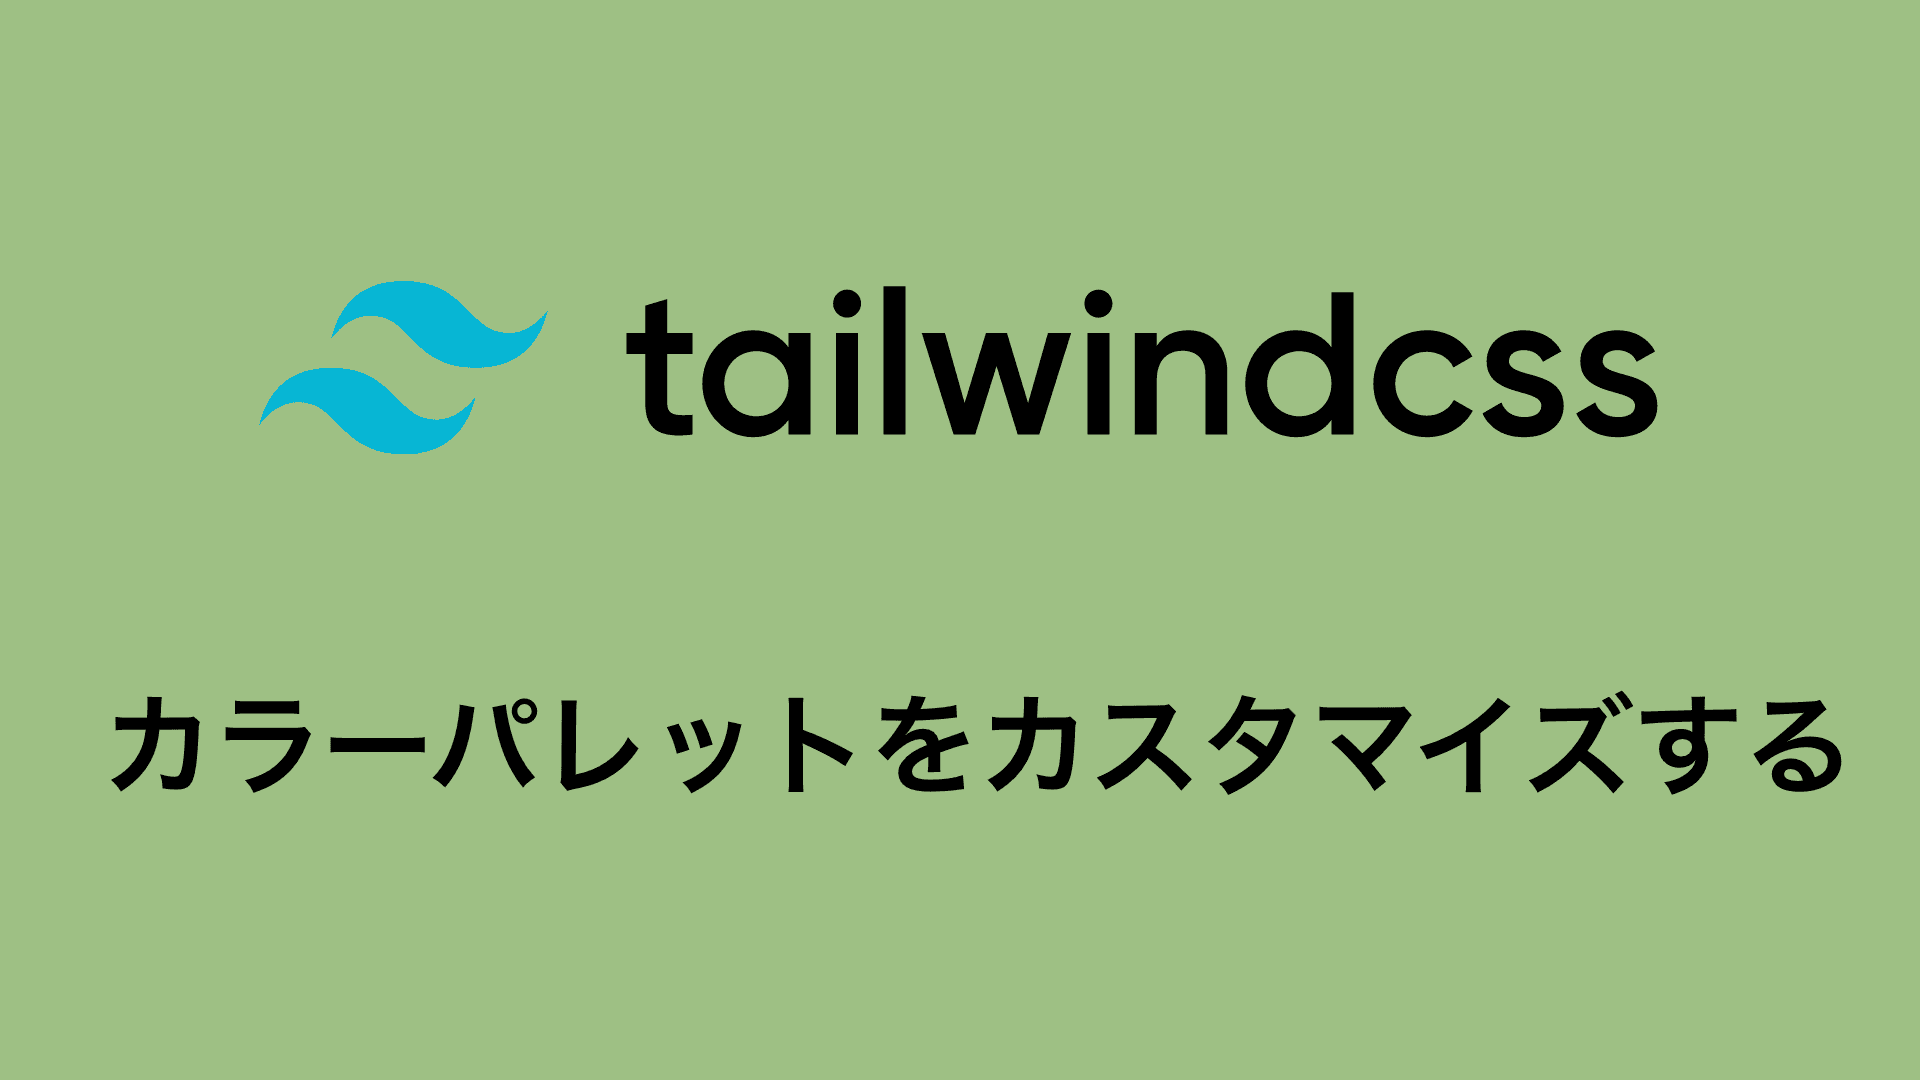 Tailwindcss